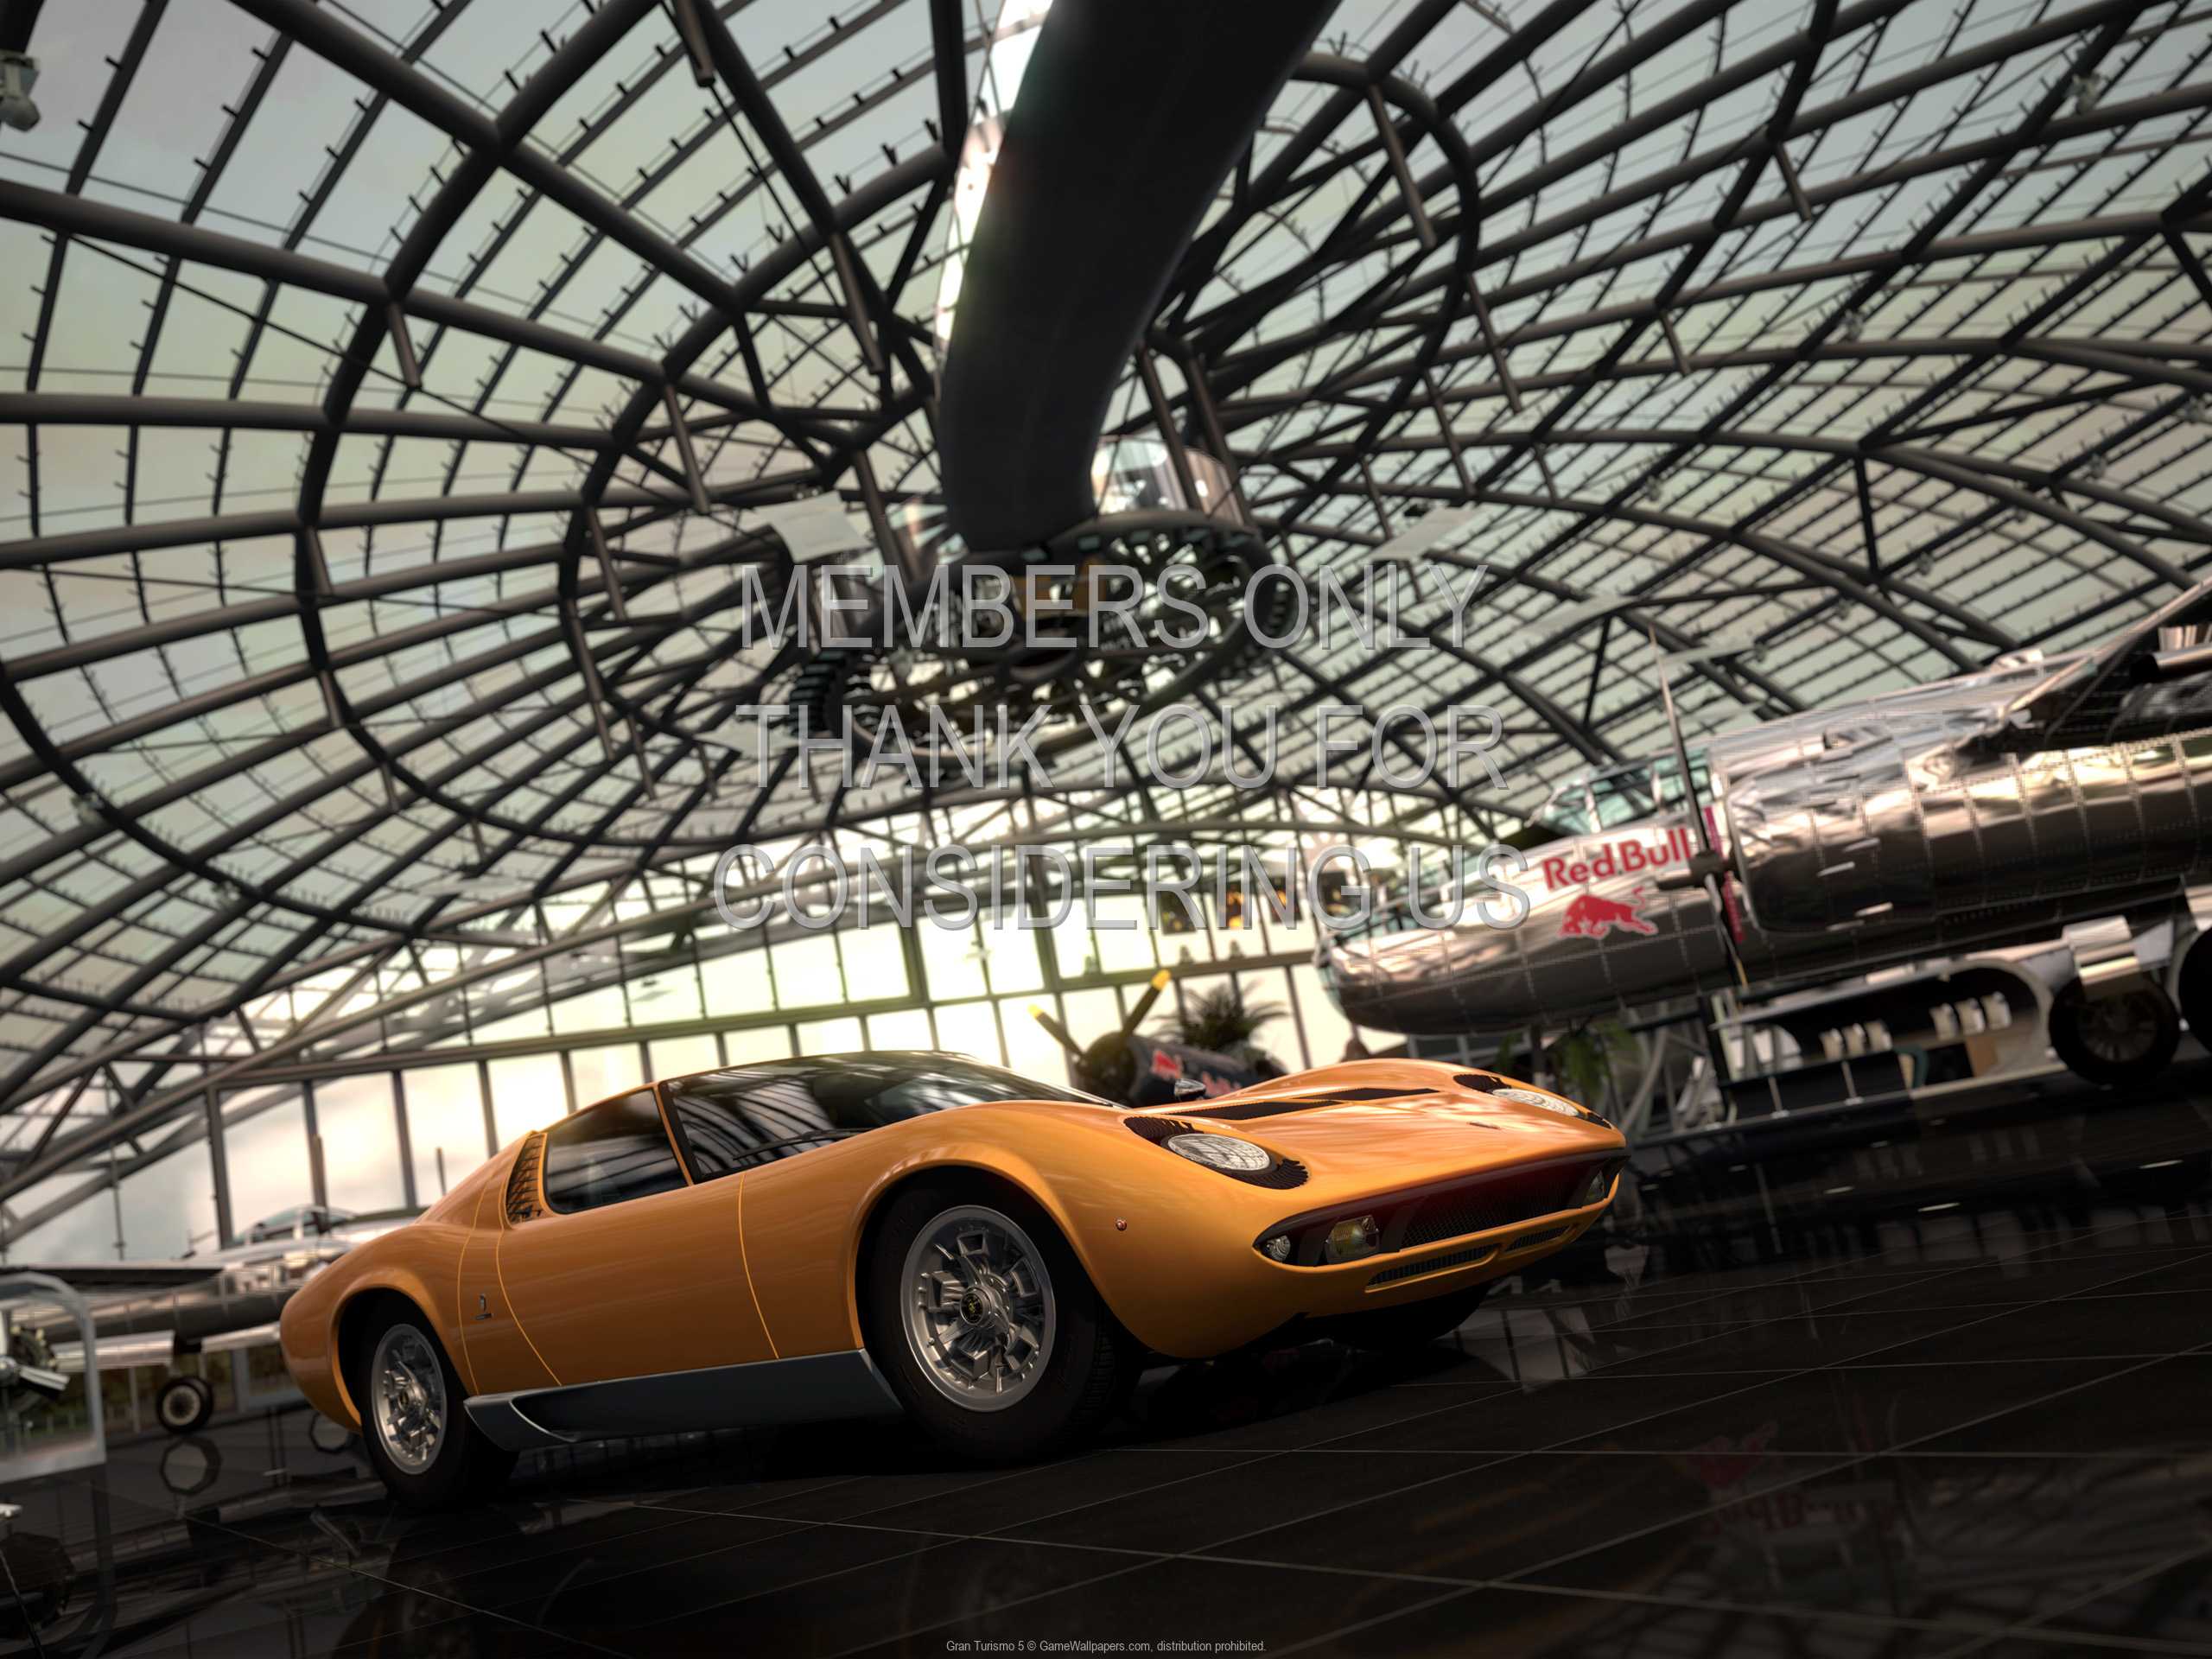 Gran Turismo 5 1080p%20Horizontal Mobile wallpaper or background 26